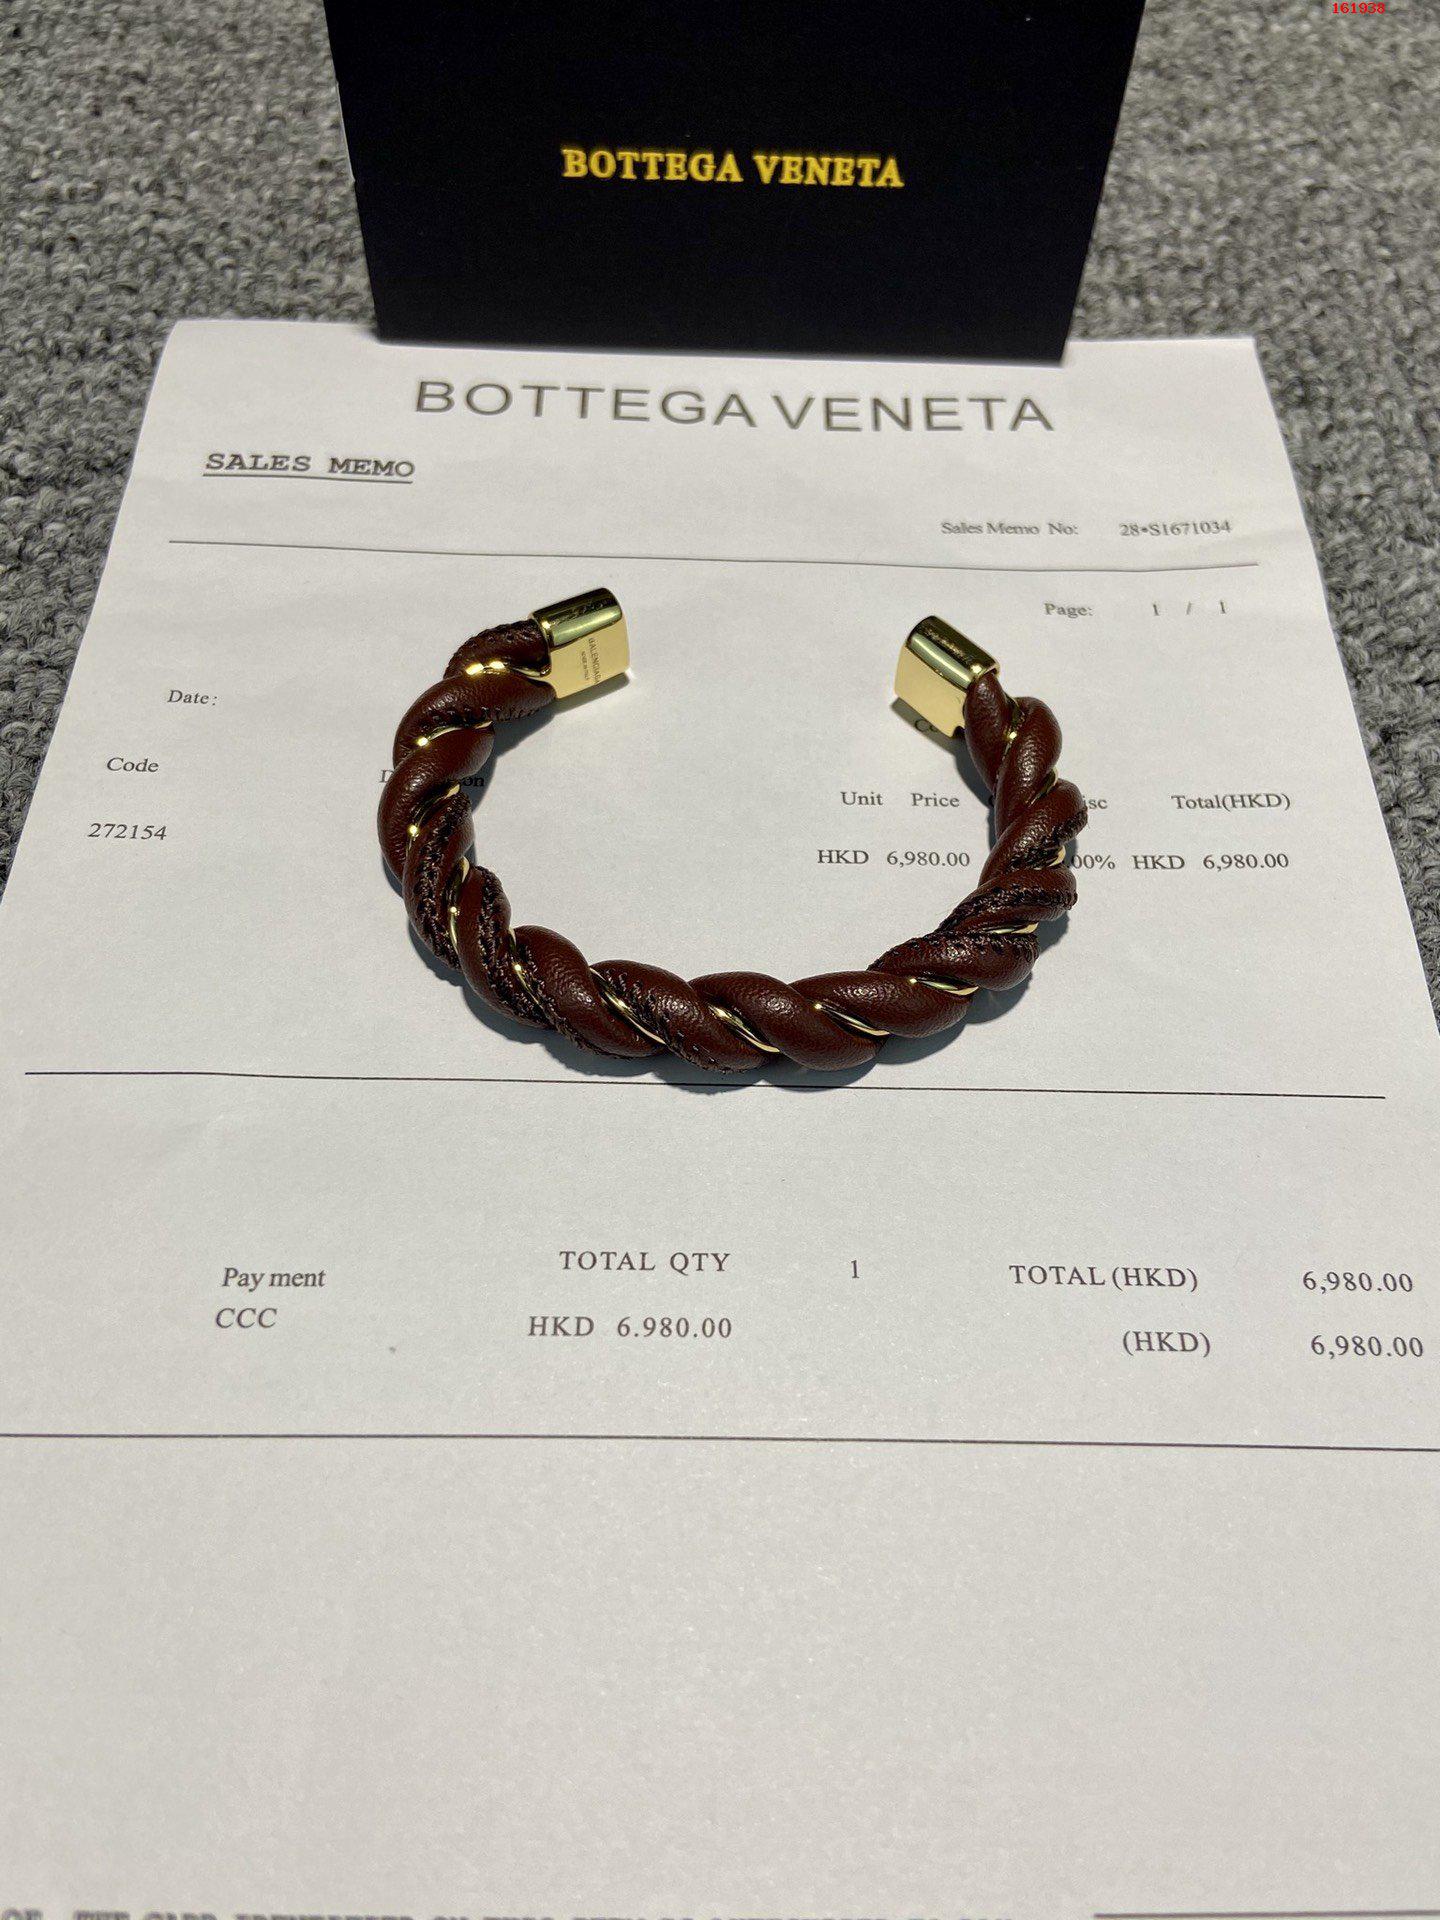 BottegaVeneta最近很火 高仿名牌手镯/手链 精仿名牌手镯/手链 原版名牌手镯/手链 A货名牌手镯/手链 原单名牌手镯/手链 